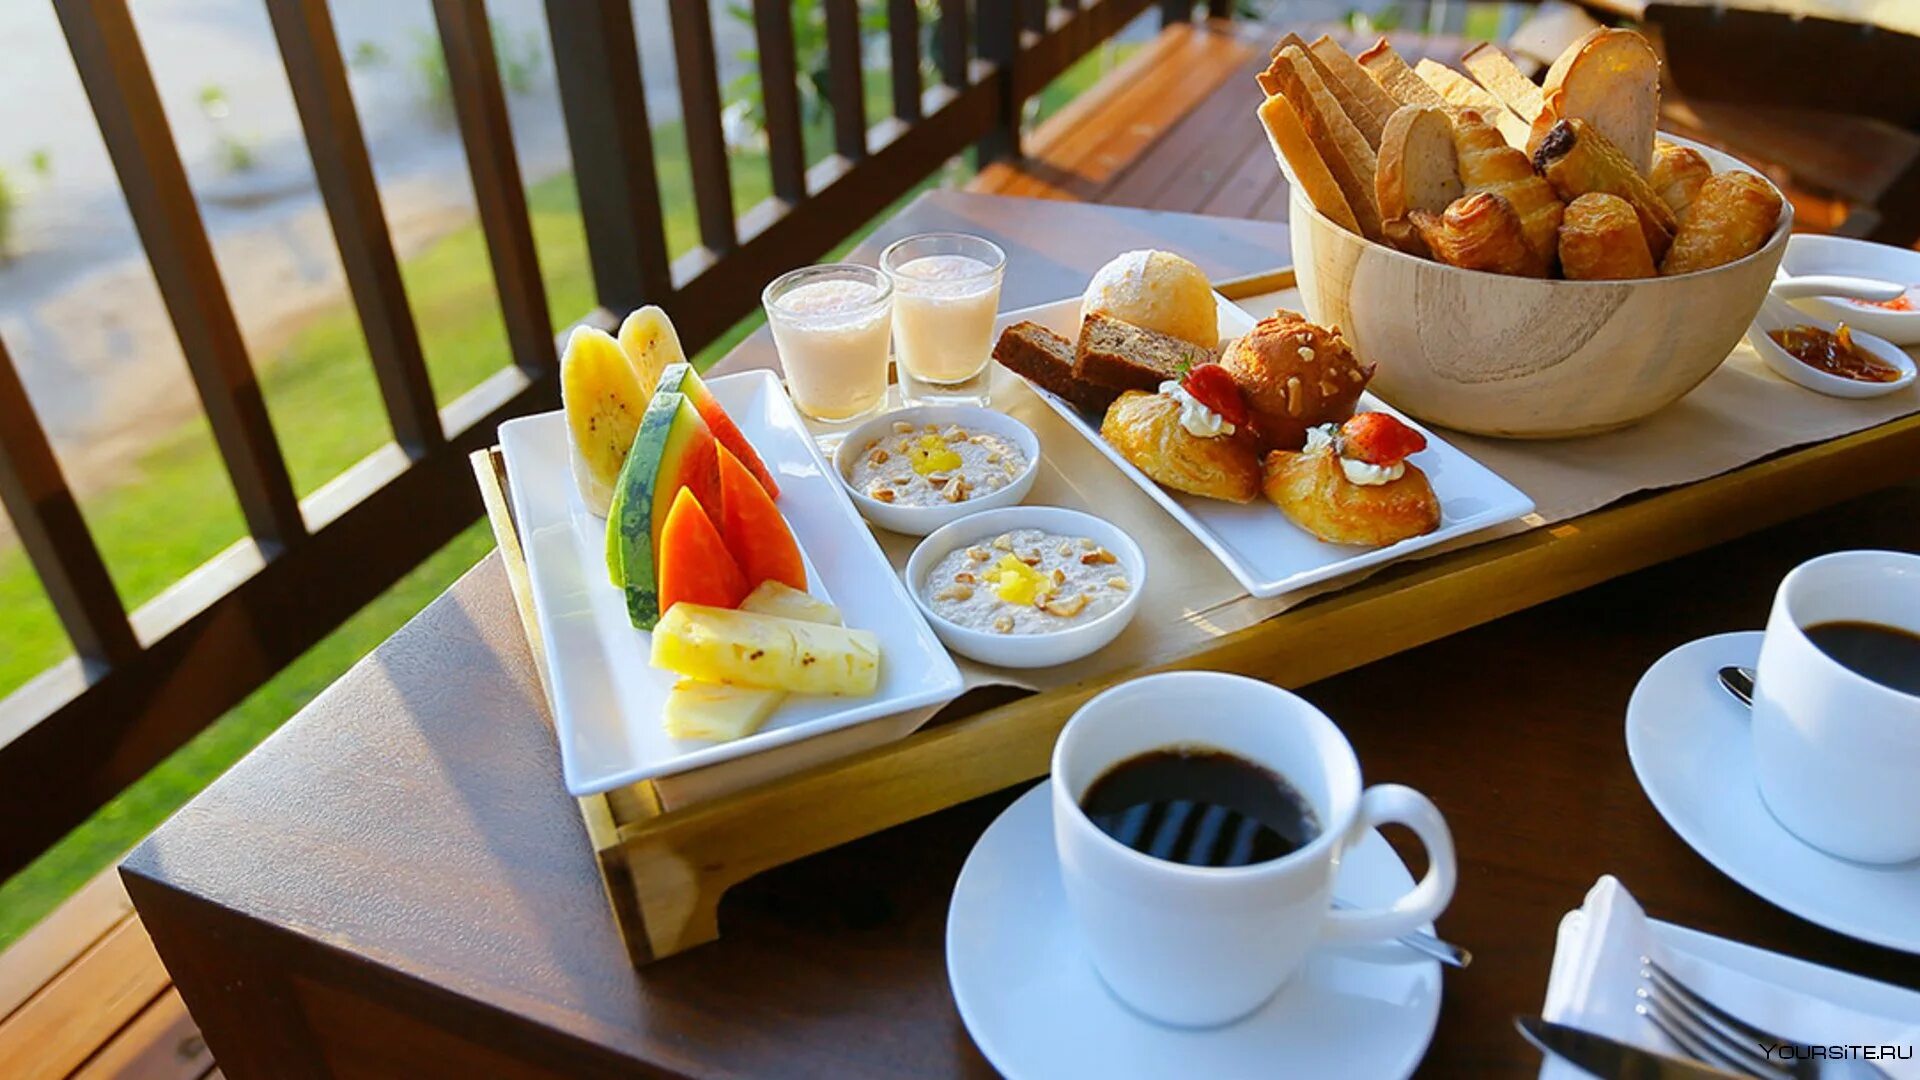 Завтрак на террасе. Летний завтрак. Уютные Завтраки на террасе. Красивый завтрак в отеле. Завтрак в летнем кафе